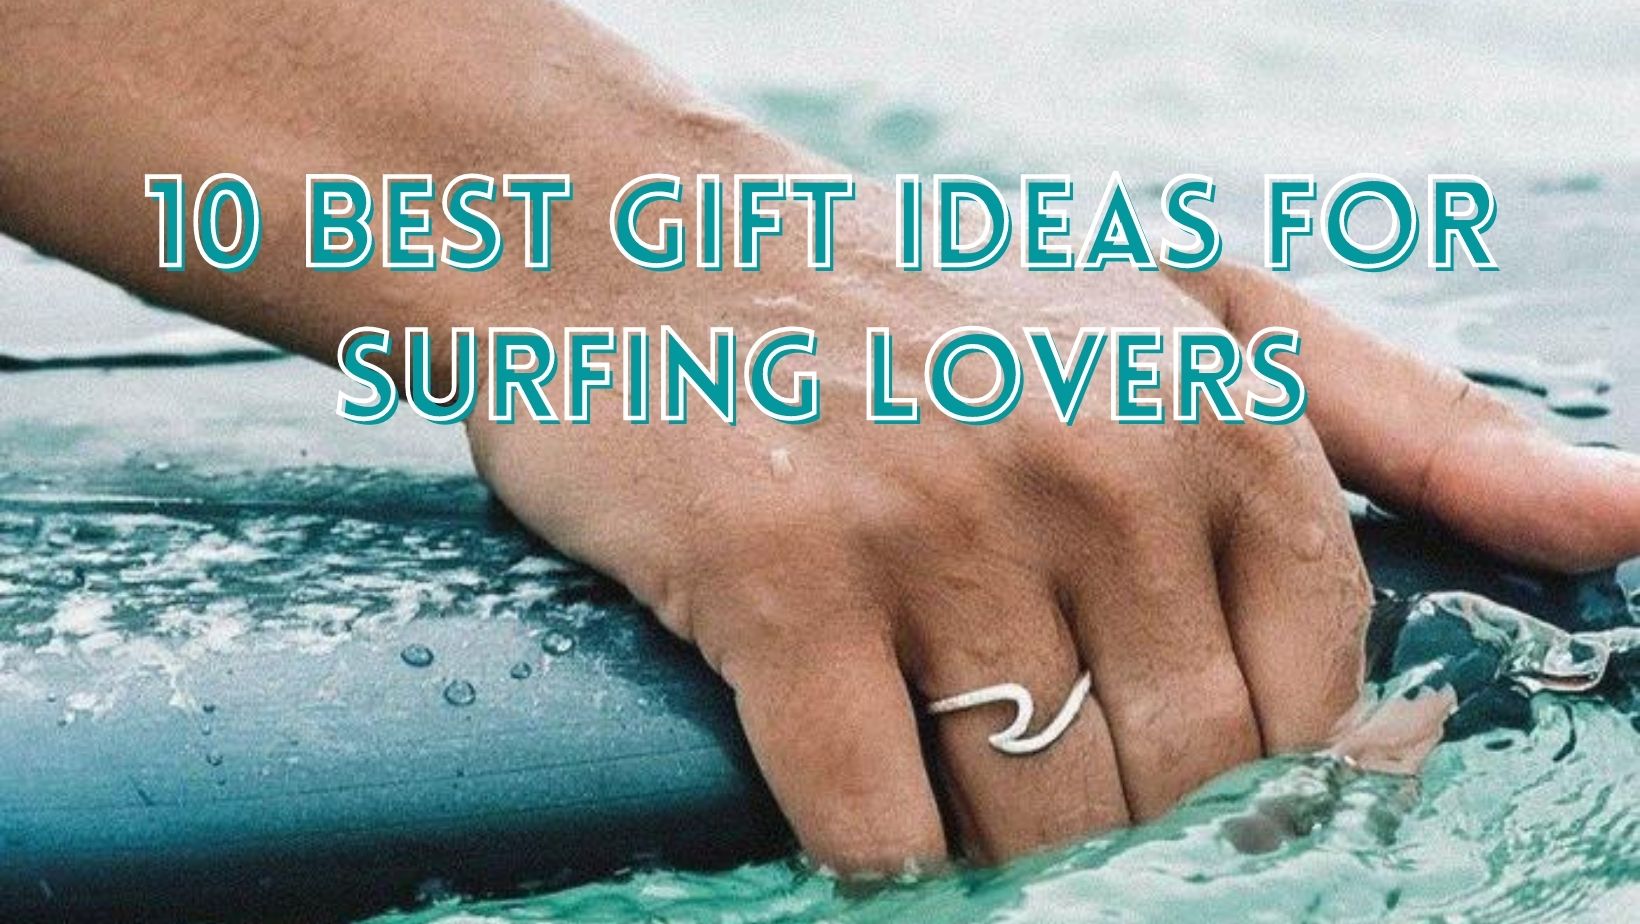 Beautiful surfer gift ideas